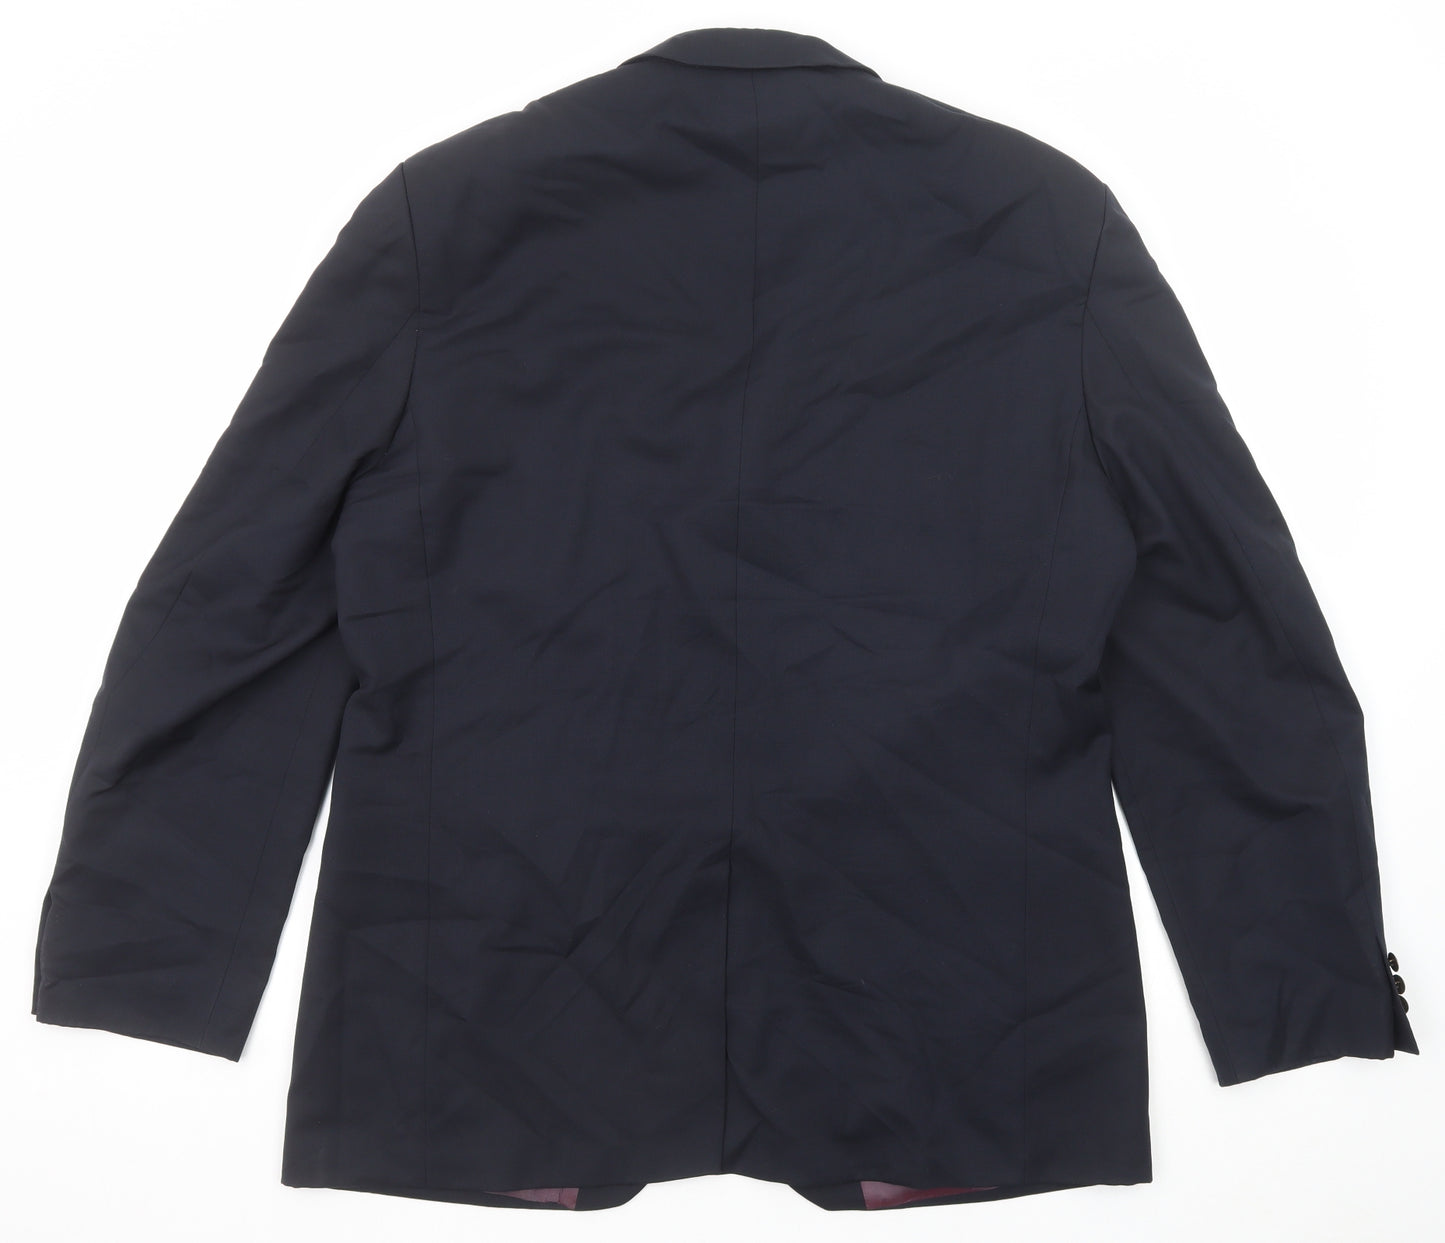 Burton Mens Black Wool Jacket Suit Jacket Size 44 Regular